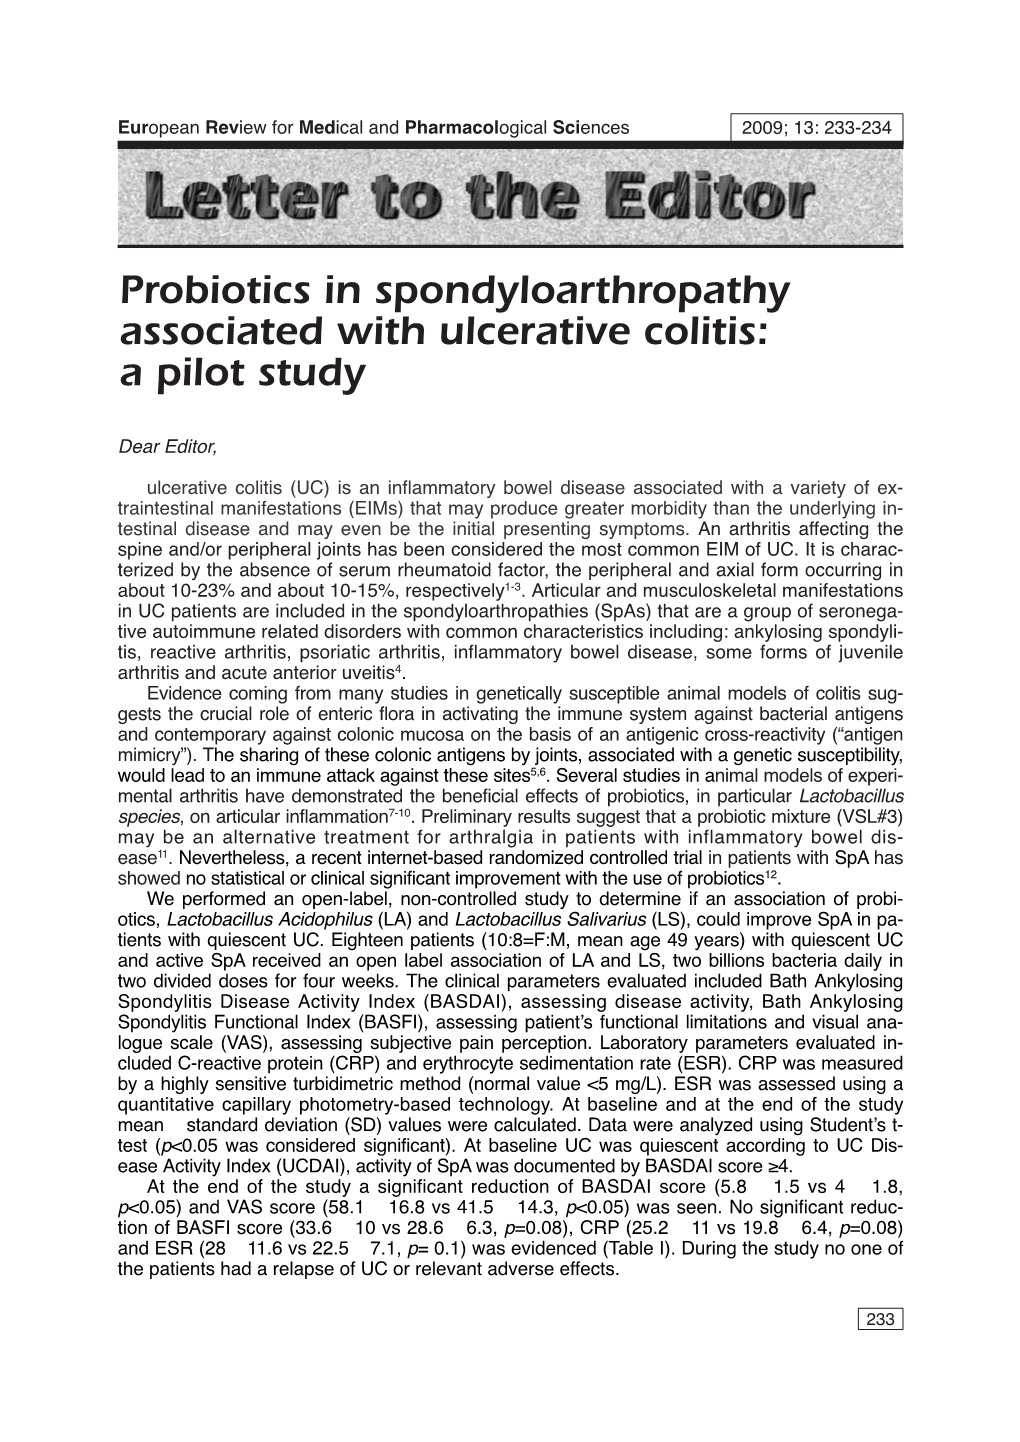 Probiotics in Spondyloarthropathy Associated with Ulcerative Colitis: a Pilot Study